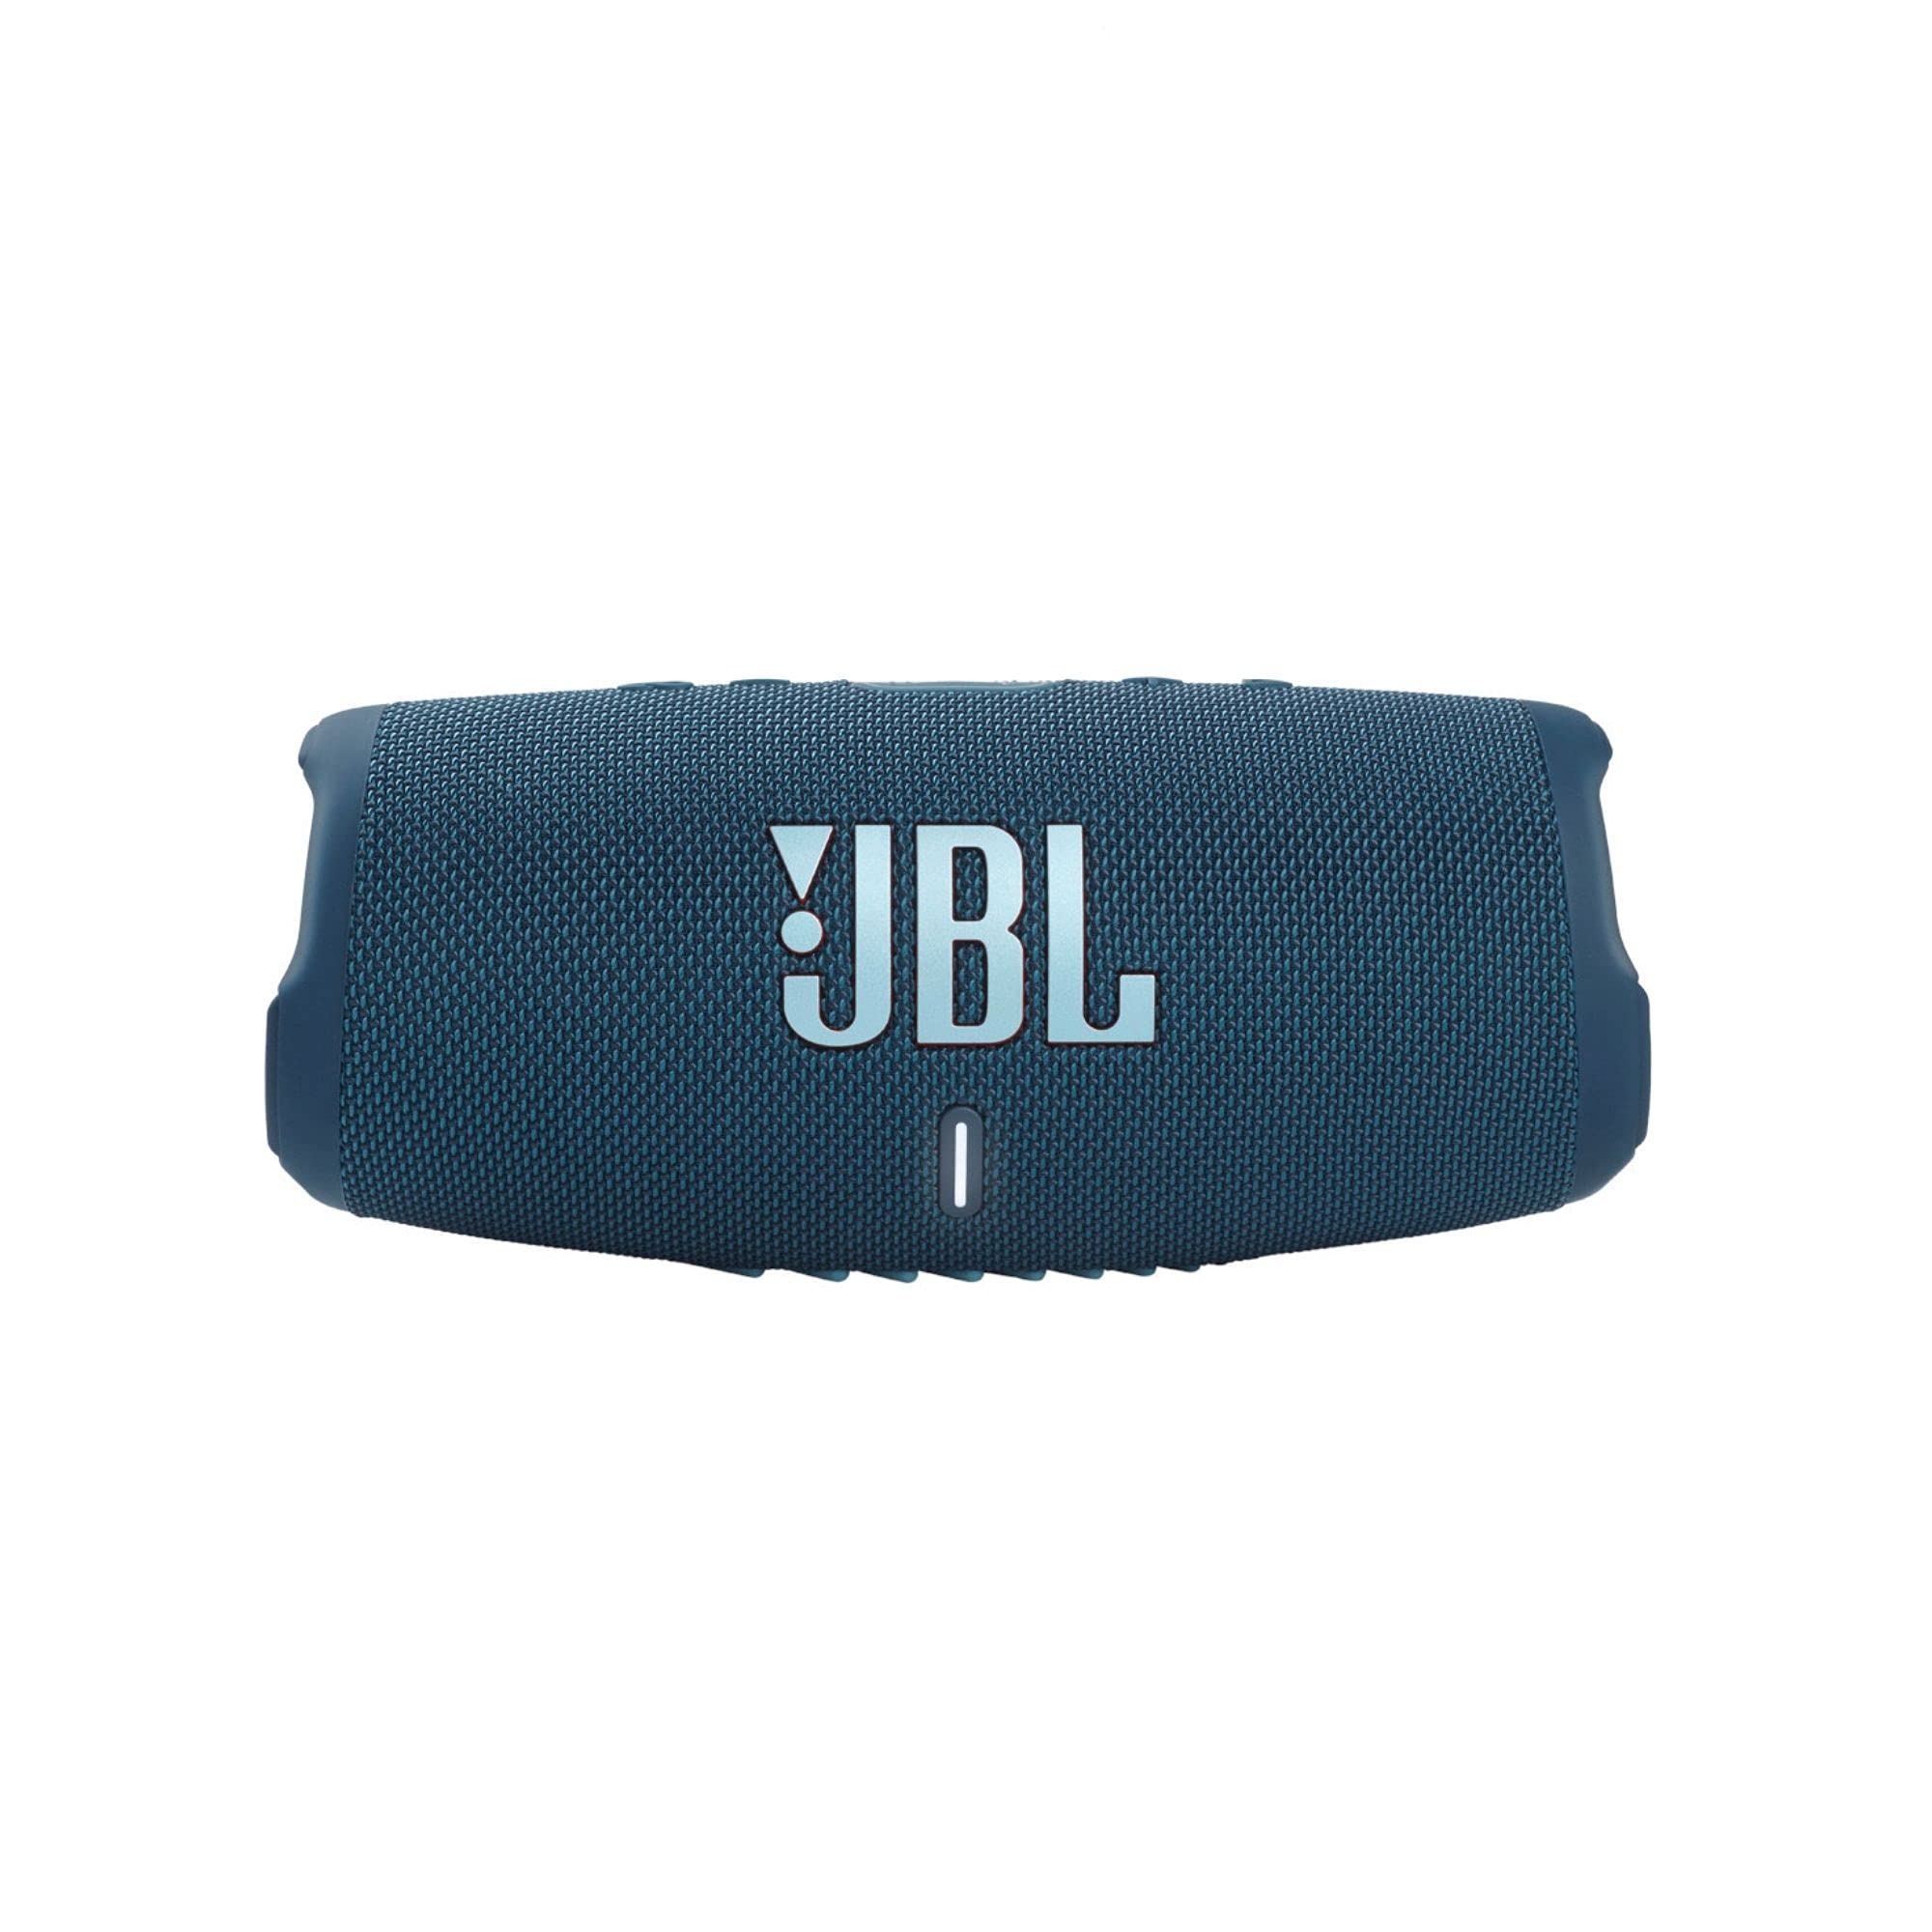 JBL Charge 5 - مكبر صوت بلوتوث محمول مع IP67 مقاوم للماء و USB Charge Out - أزرق (مجدد)